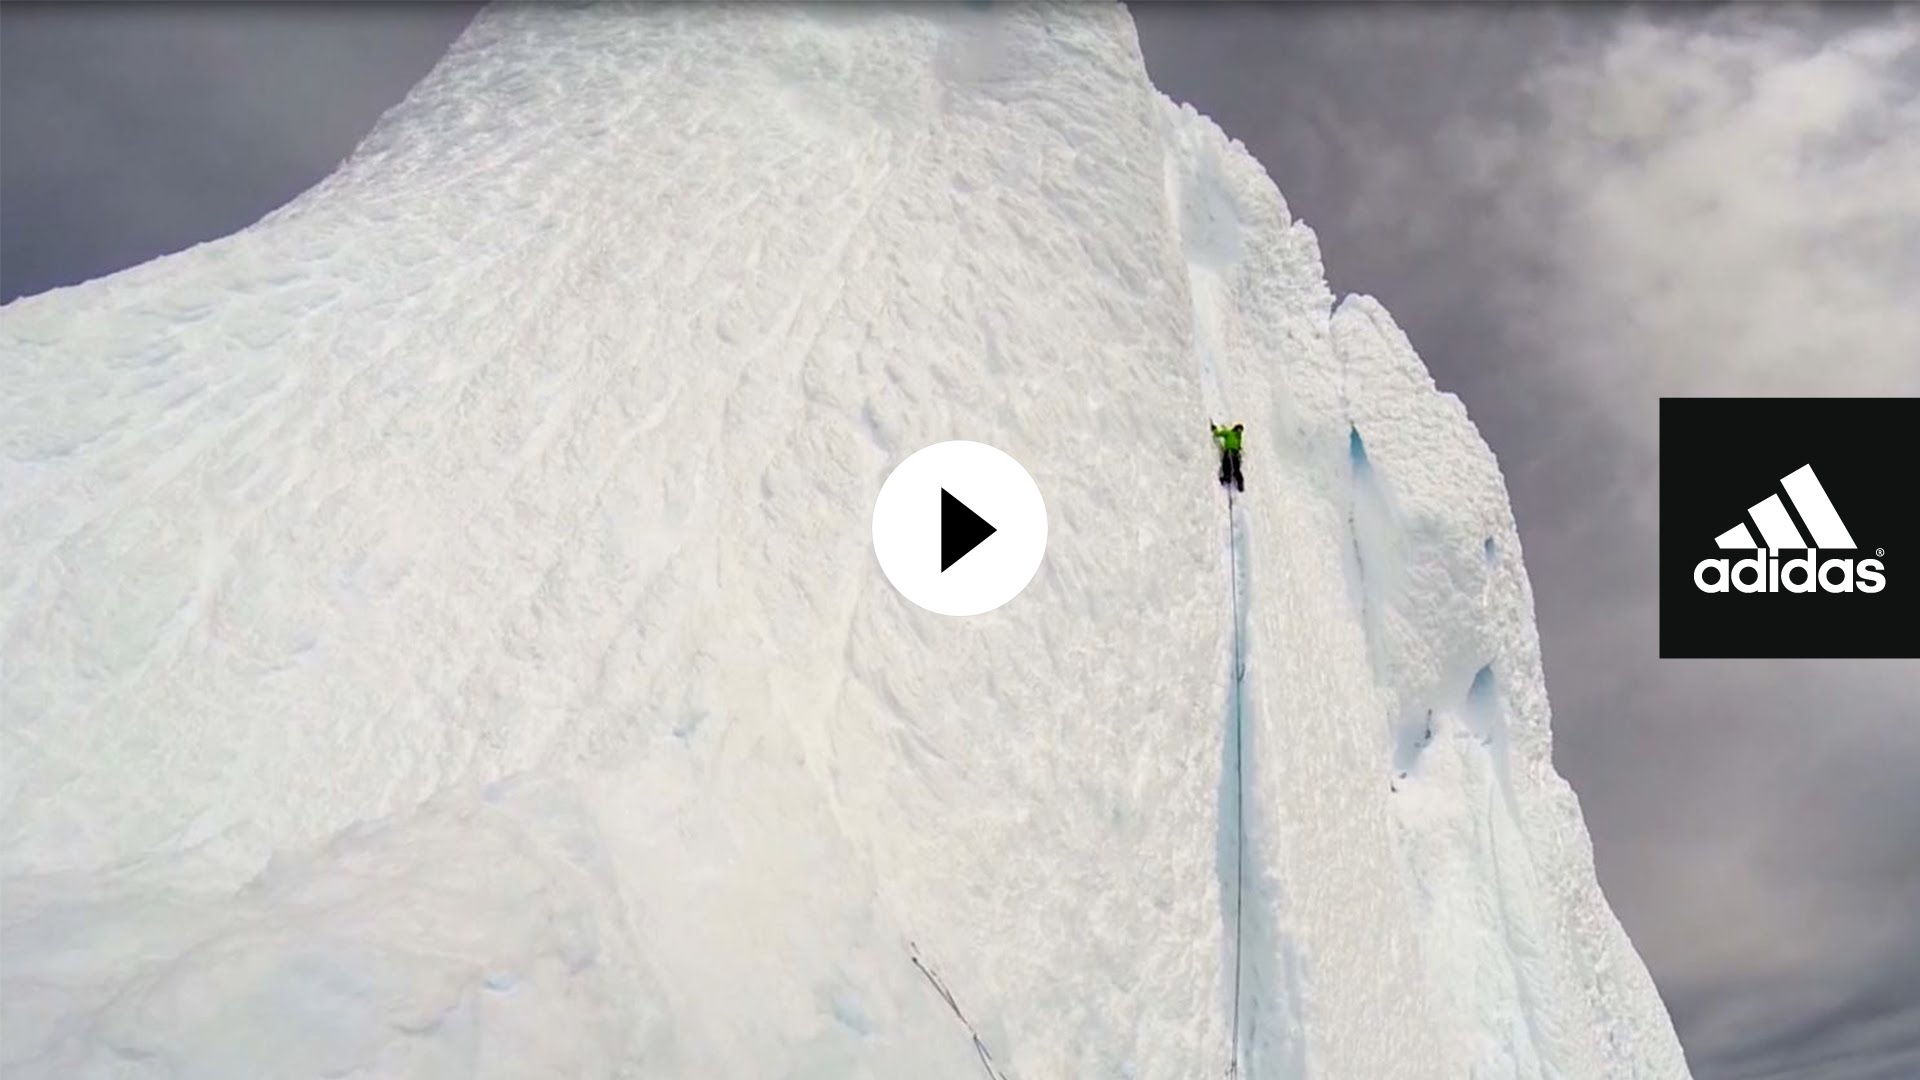 Vídeo de Jess Roskelley y Ben Erdman en Cerro Torre, Patagonia